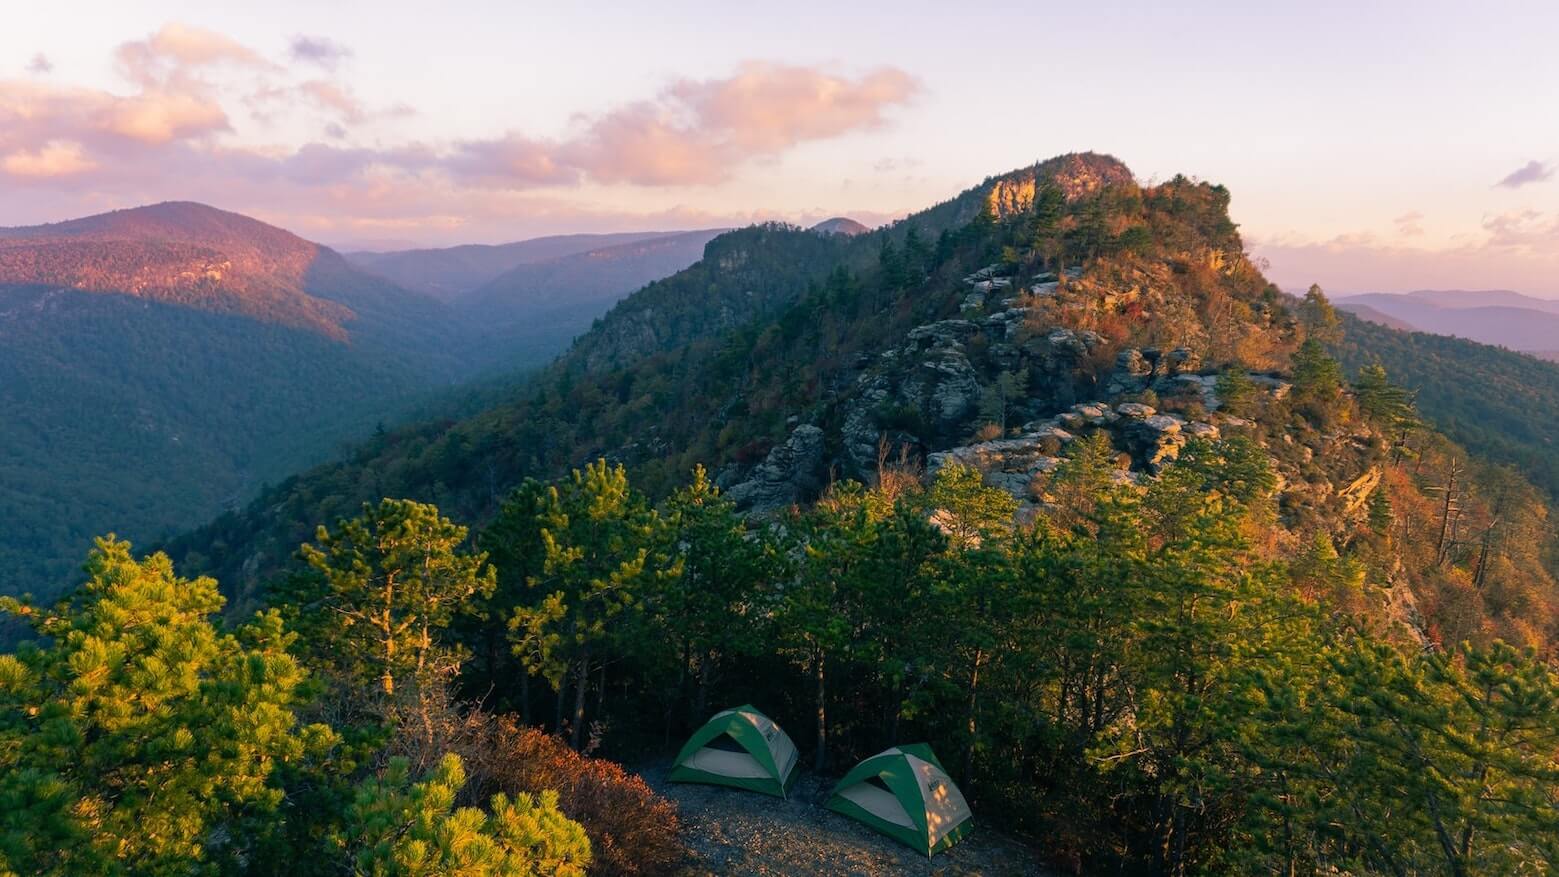 Sleeping Bags Buyers Guide - Tents in Mountain Scenery